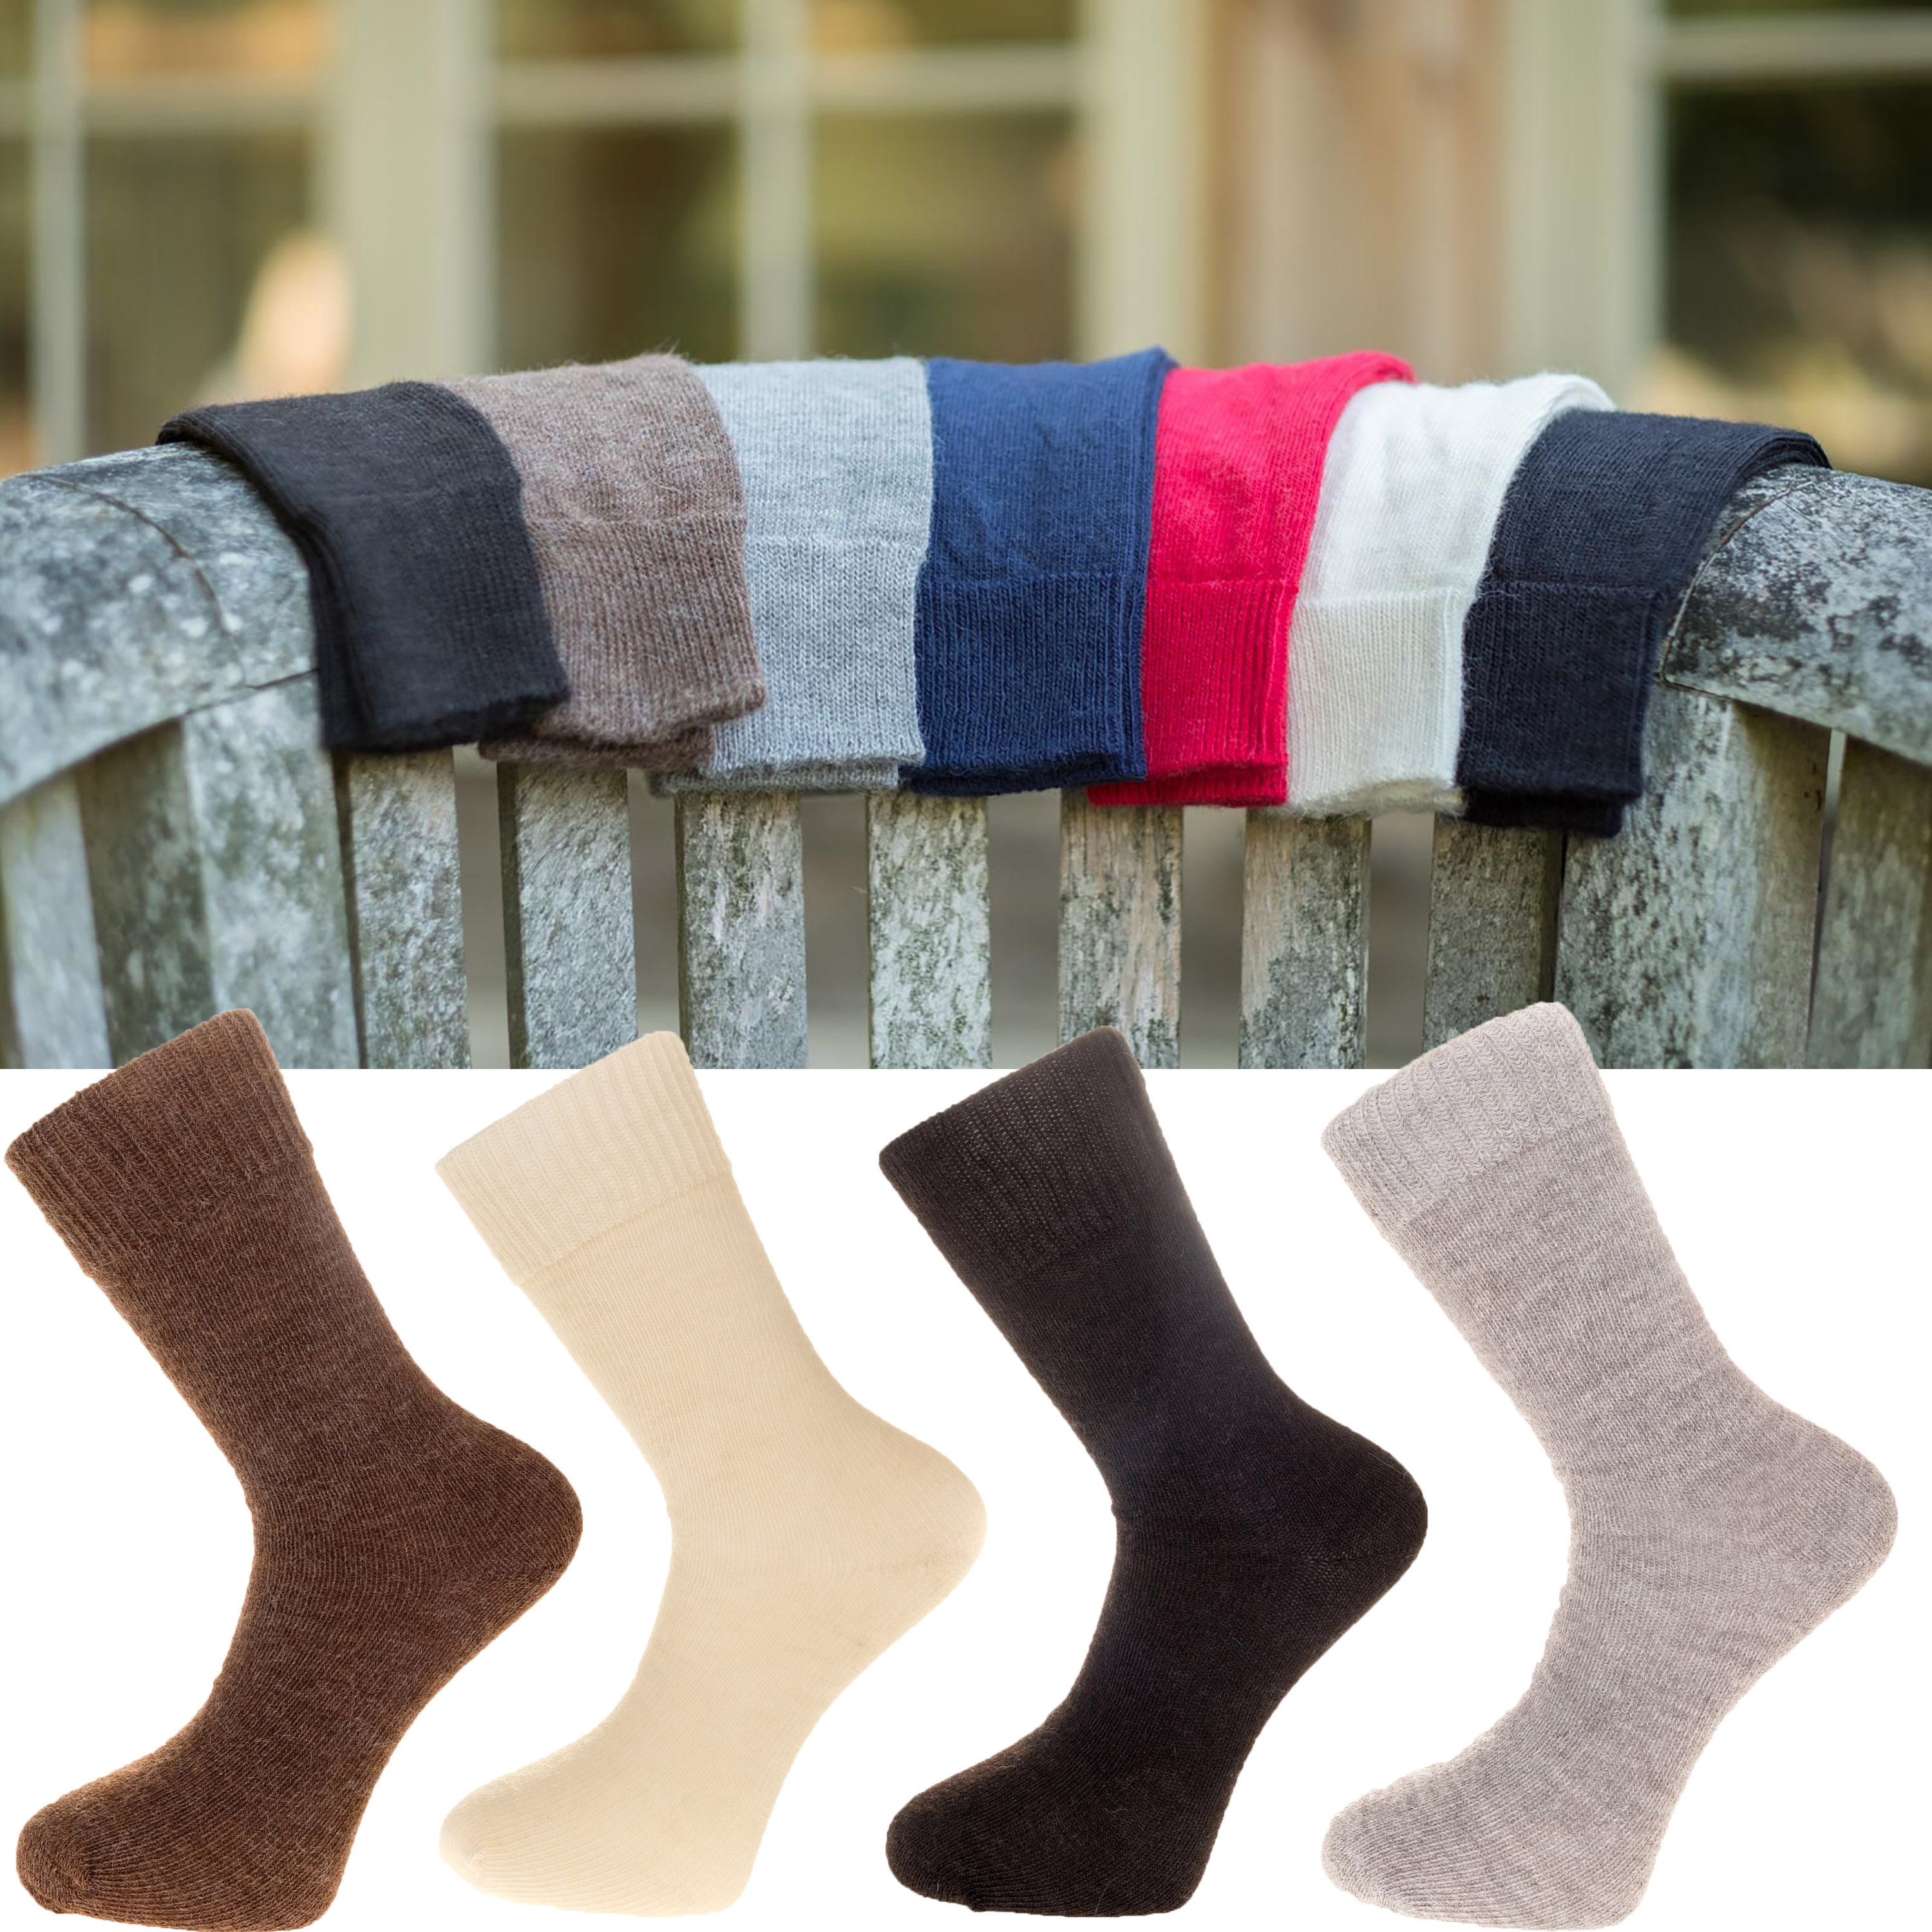 Every day Alpaca socks soft warm 55% Alpaca wool 45% Nylon, hard wearing UK